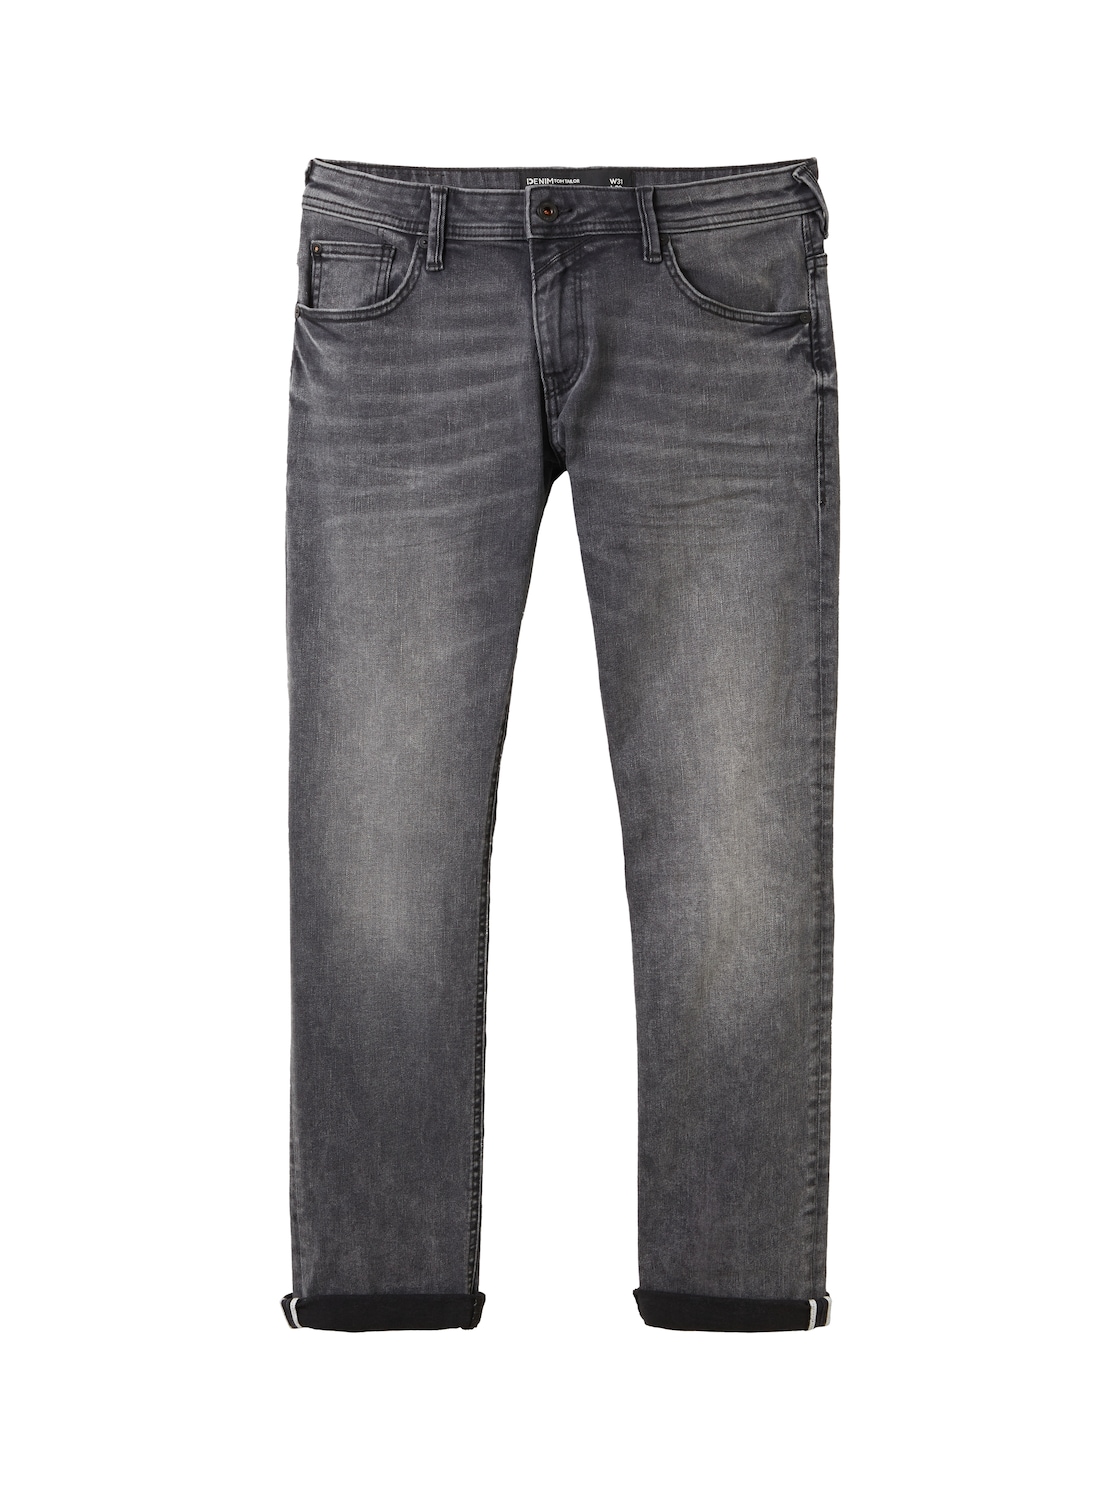 TOM TAILOR DENIM Herren Aedan Straight Jeans, grau, Uni, Gr. 32/32 von Tom Tailor Denim